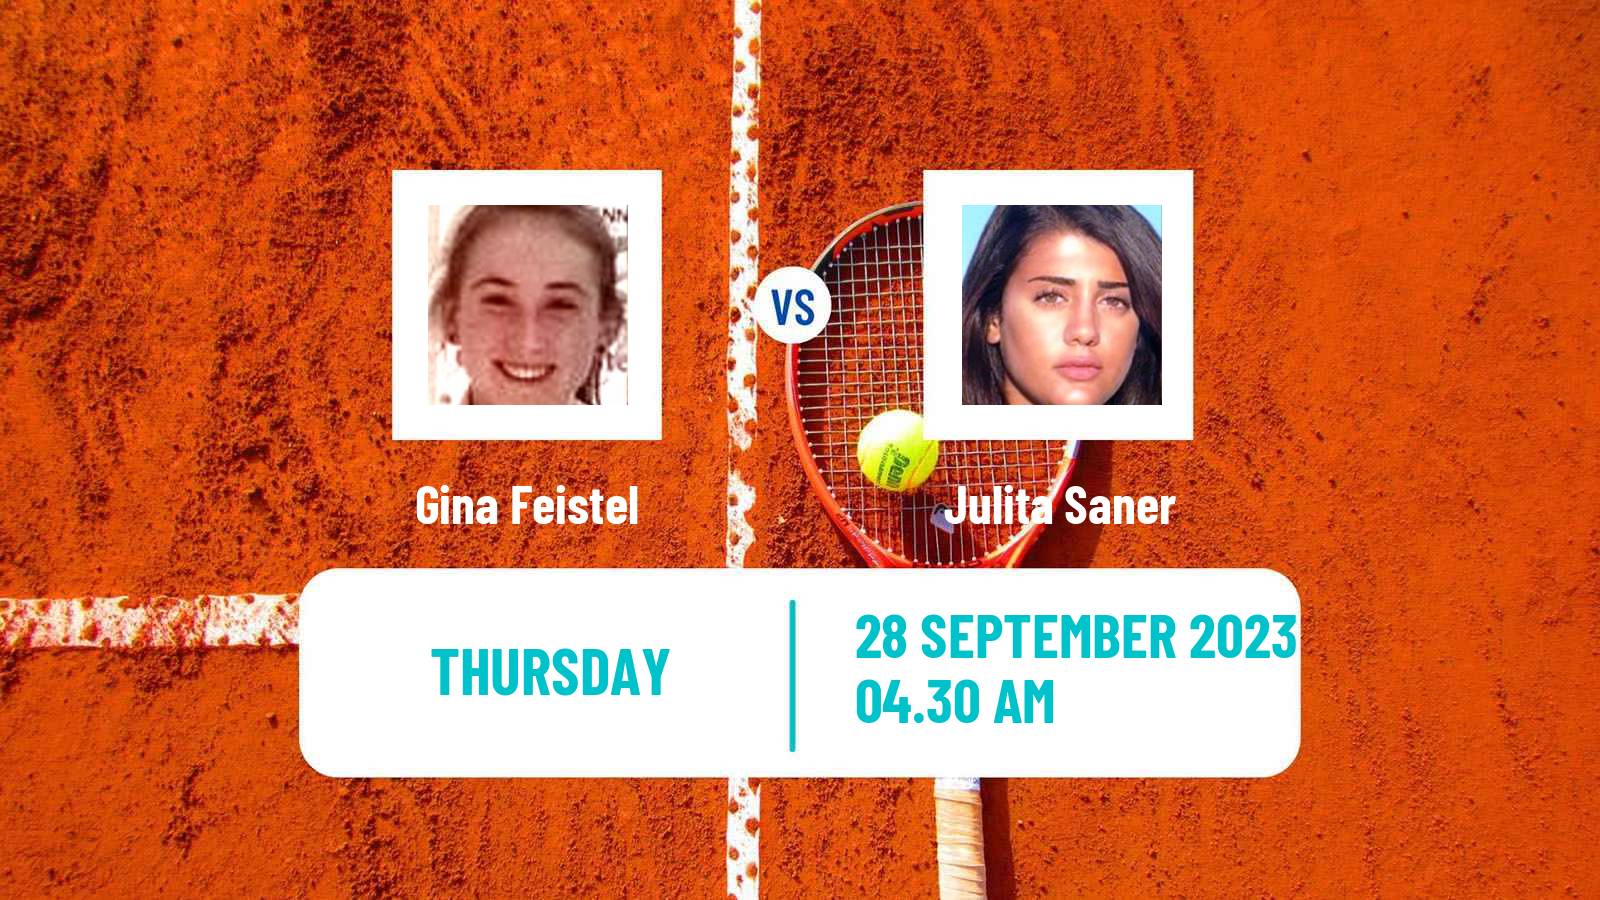 Tennis ITF W15 Monastir 34 Women Gina Feistel - Julita Saner